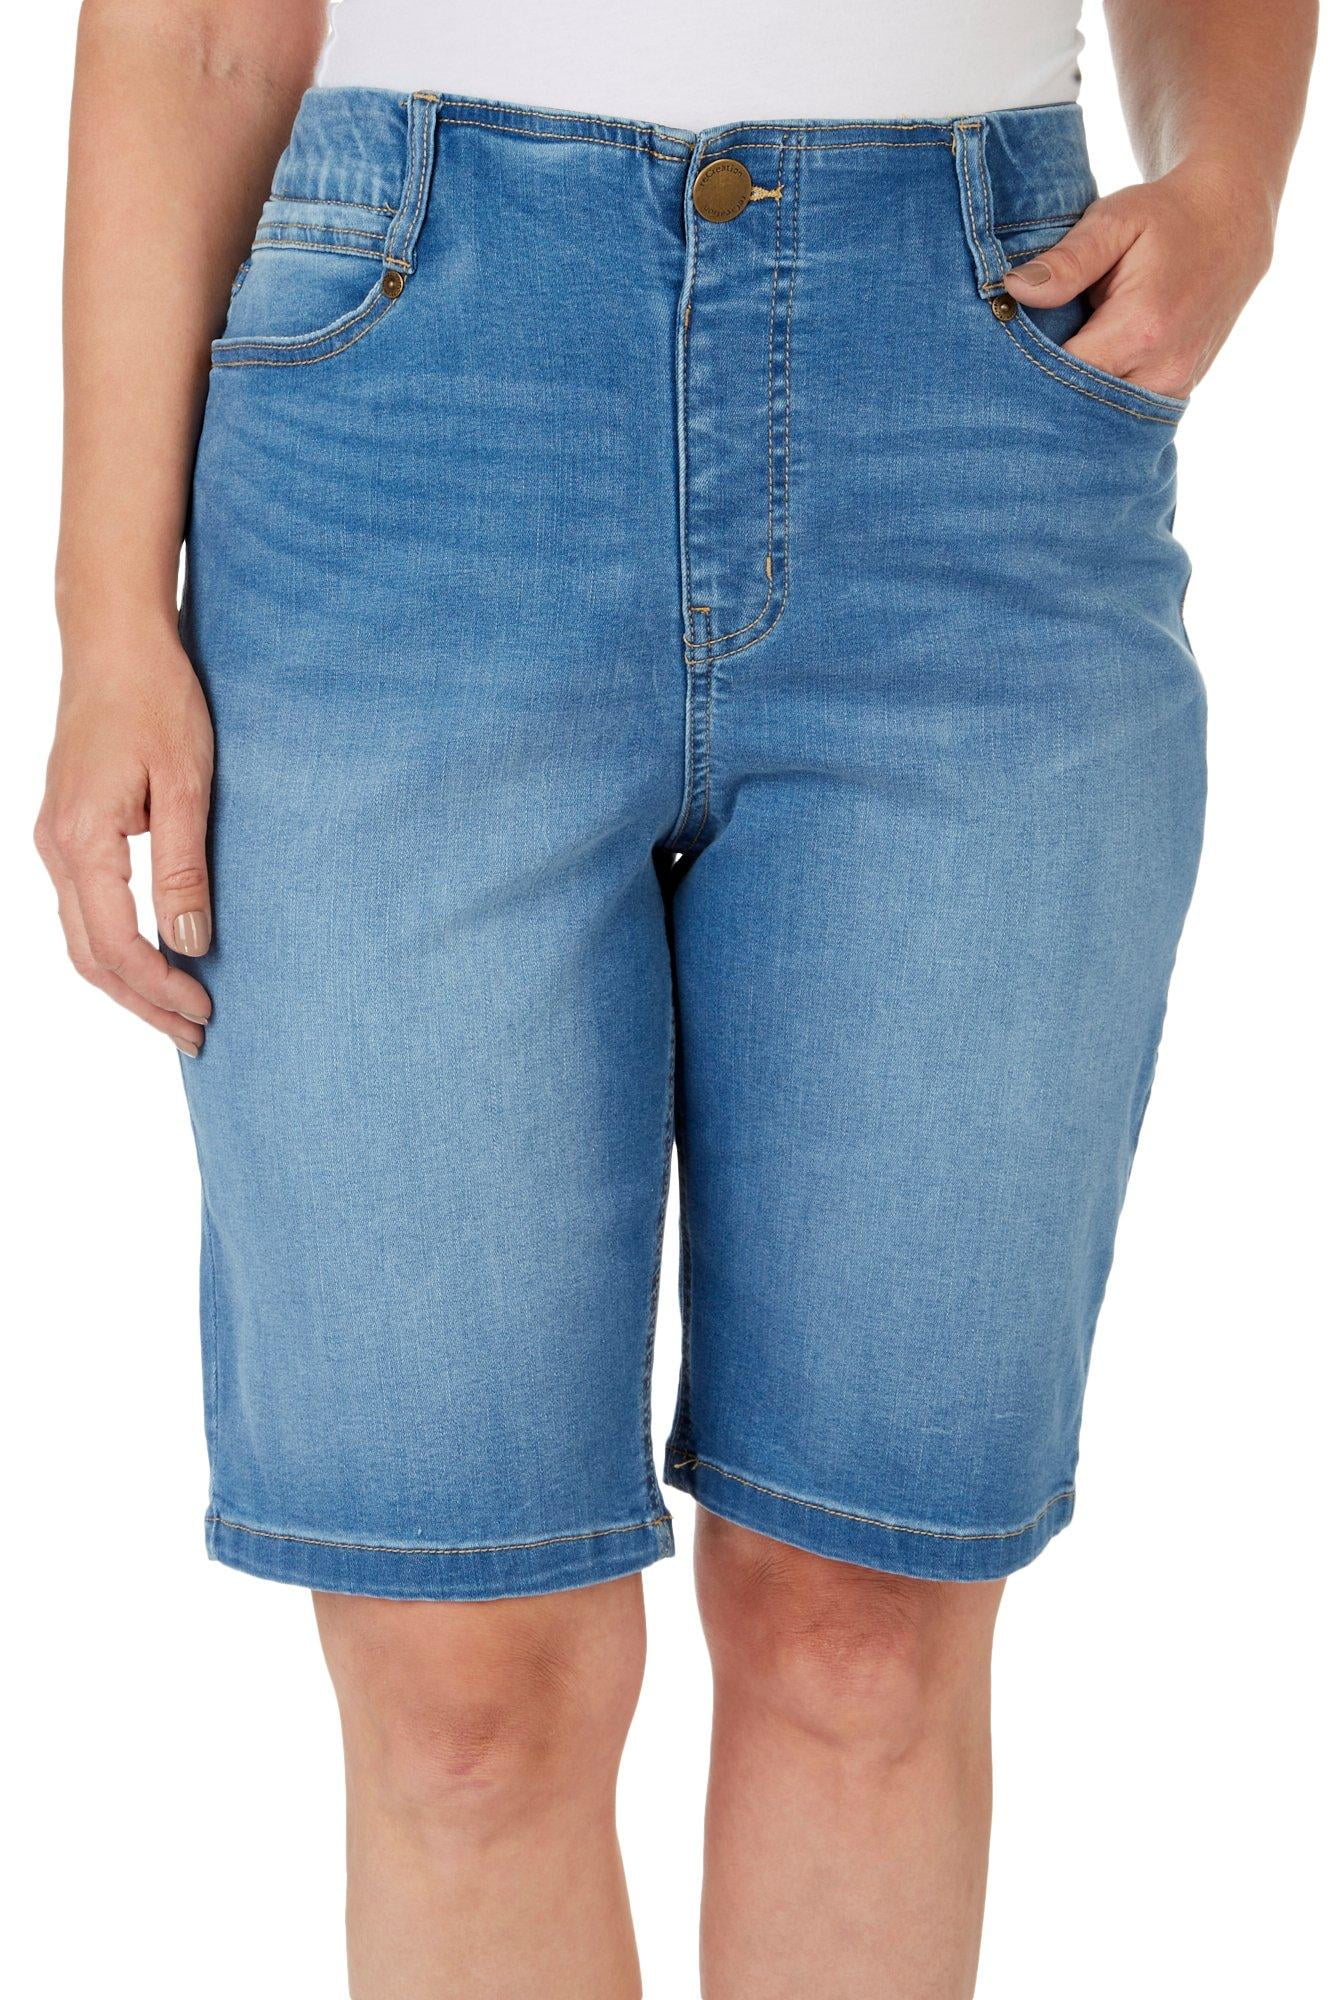 RieKet Women's Bermuda Denim Shorts Skinny Stretch Short Jeans 